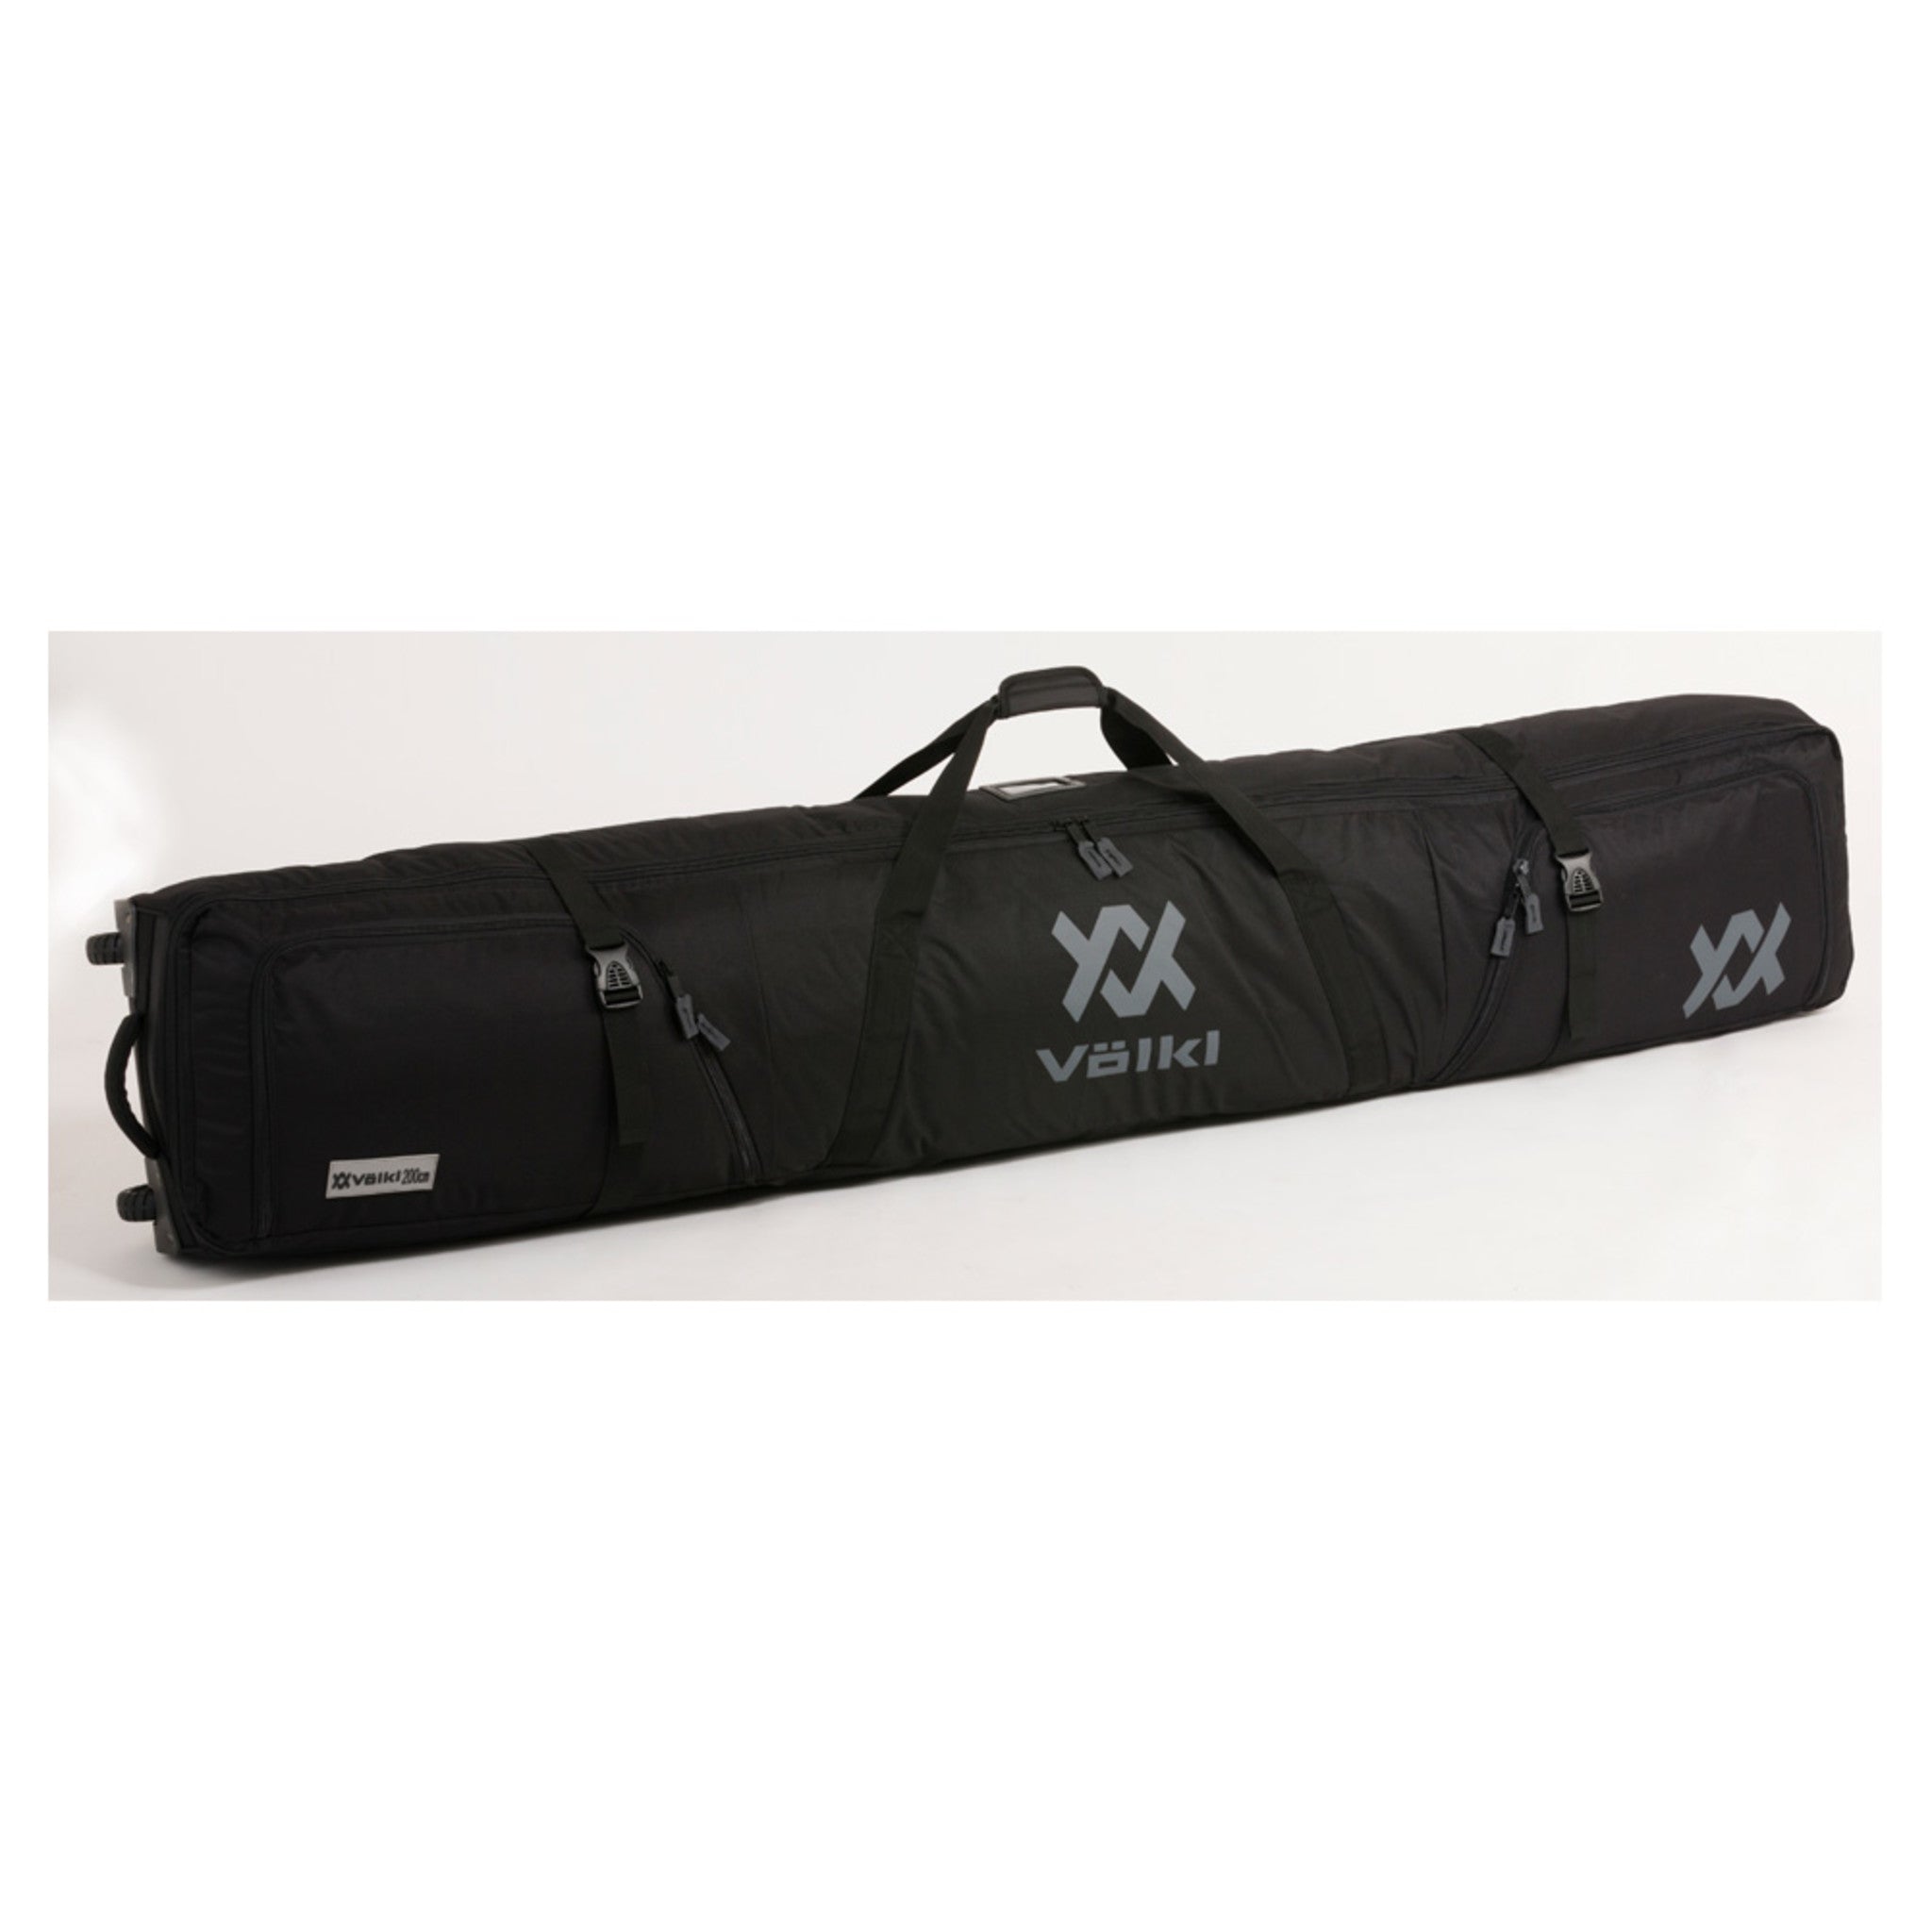 Volkl Double Wheeled Ski Bag 200cm, Alpine / Alpine Accessories